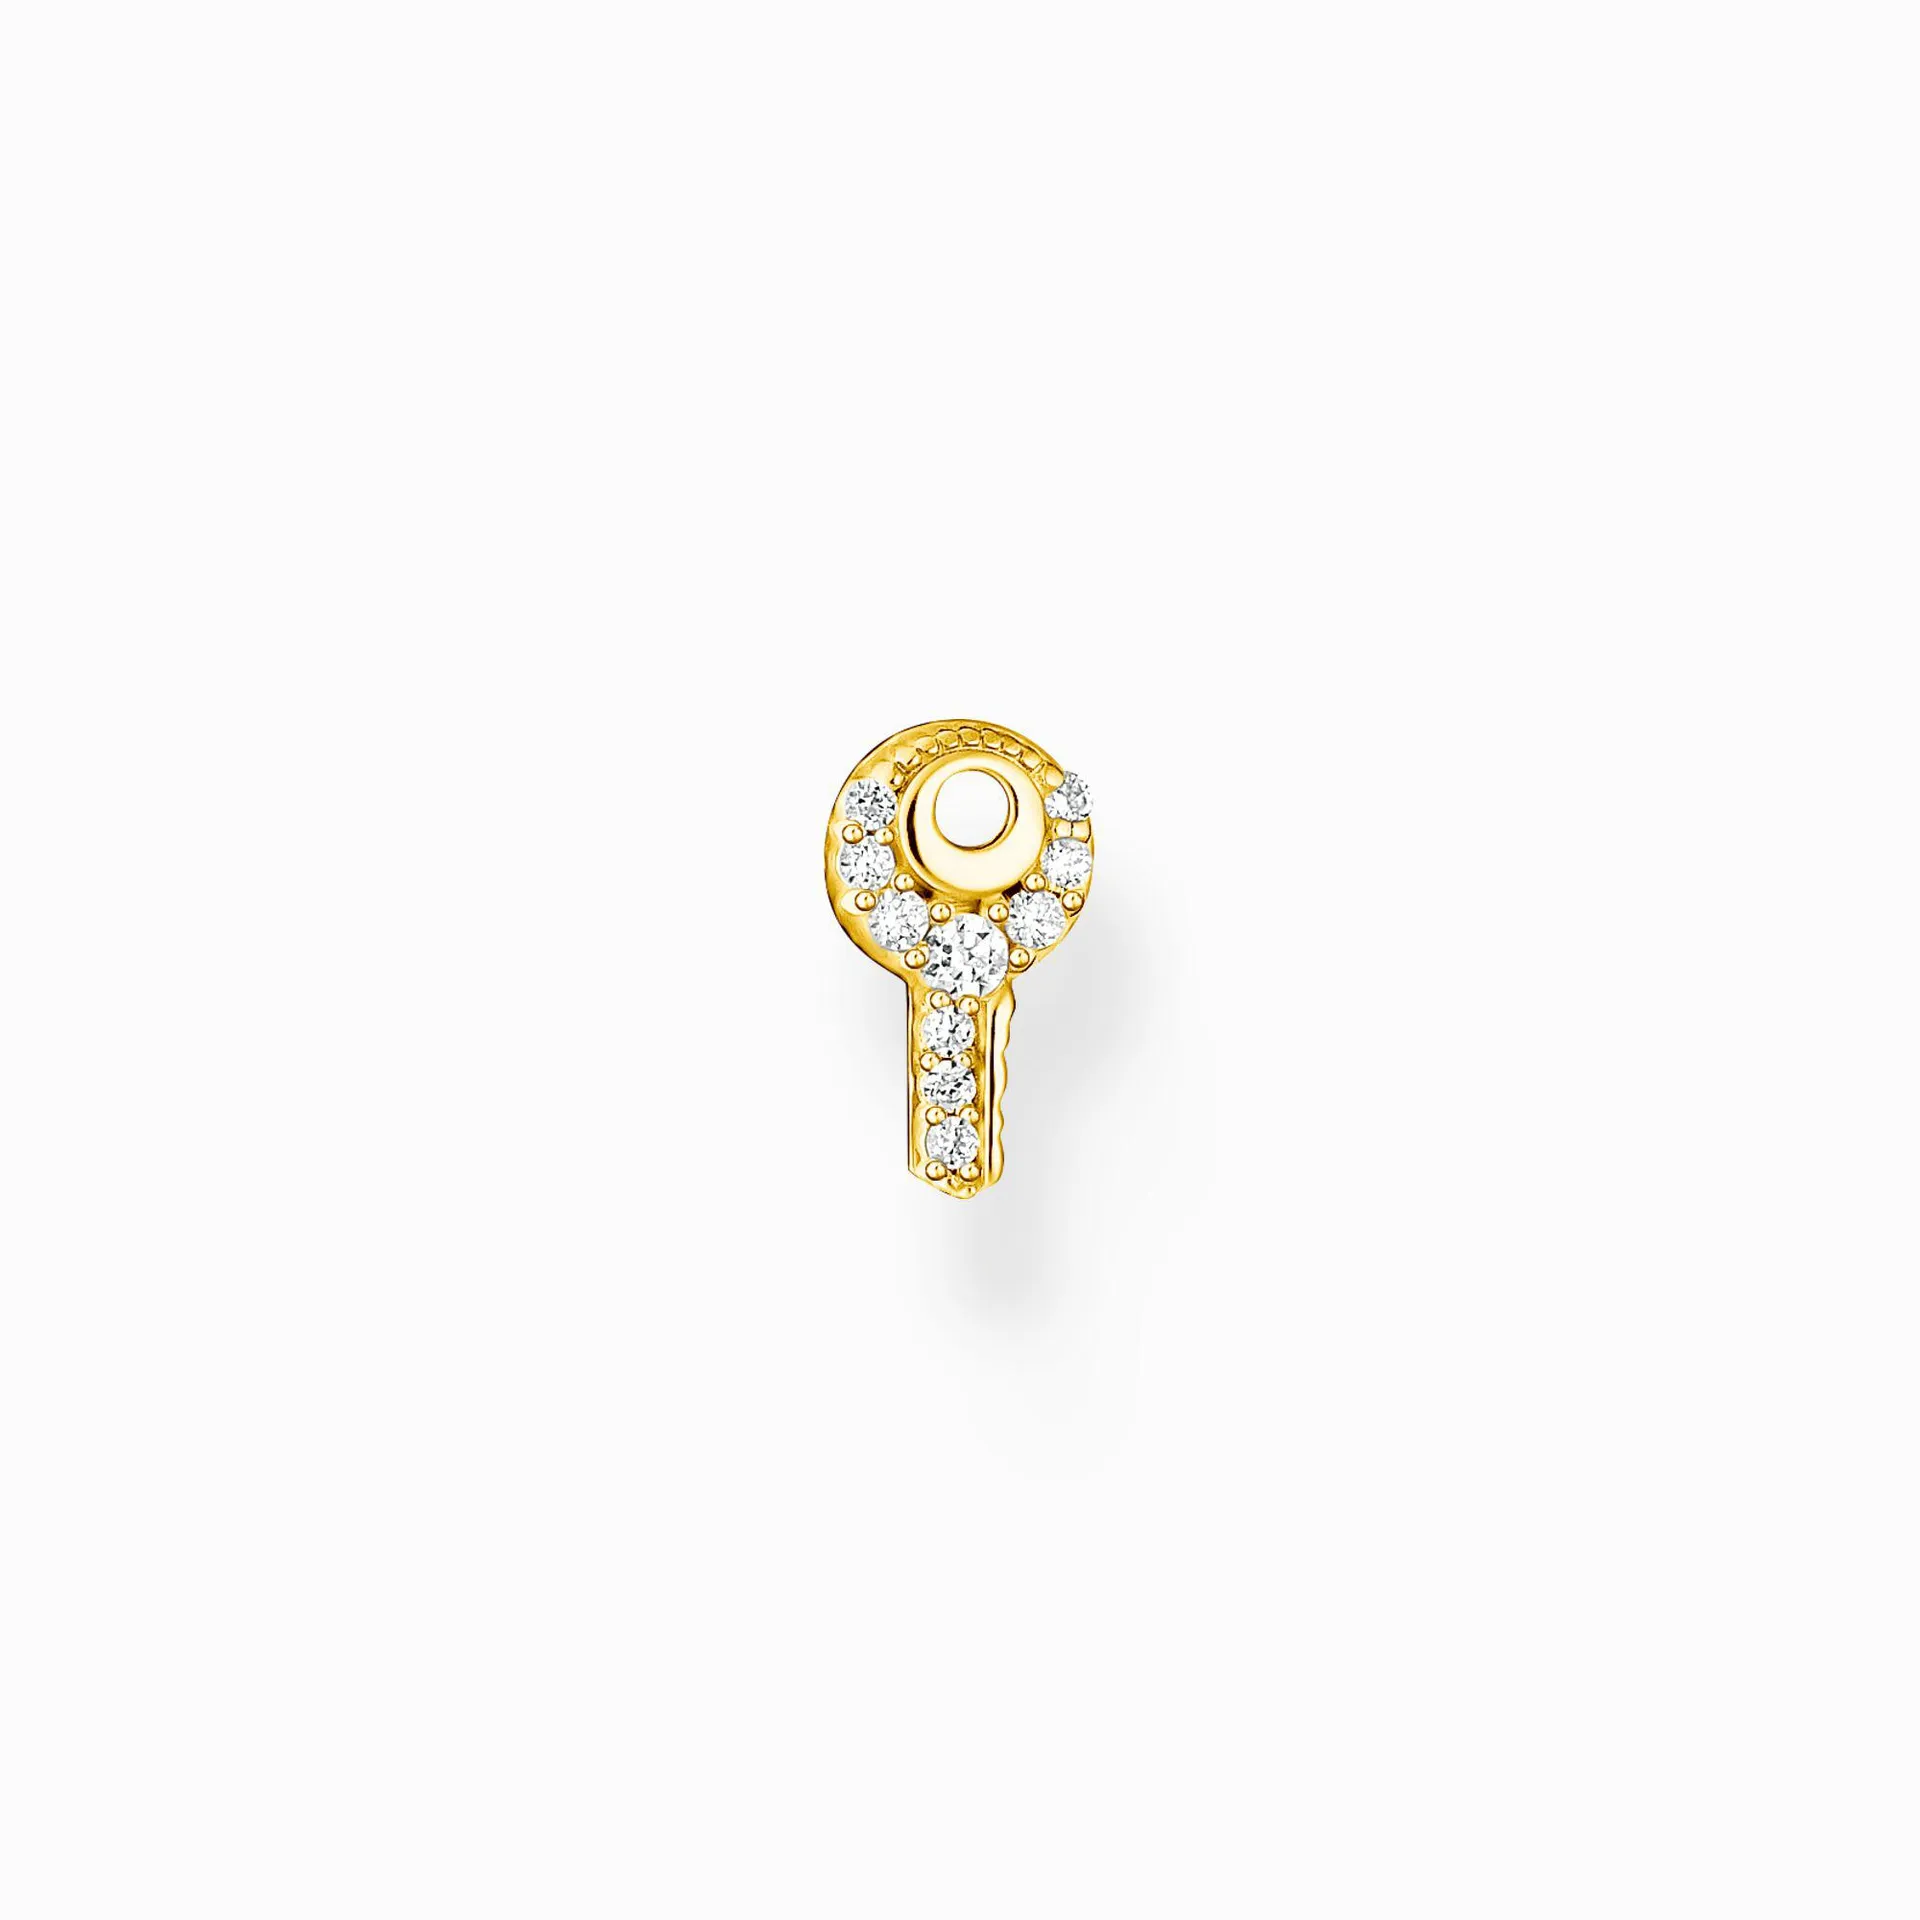 Single ear stud key white stones gold